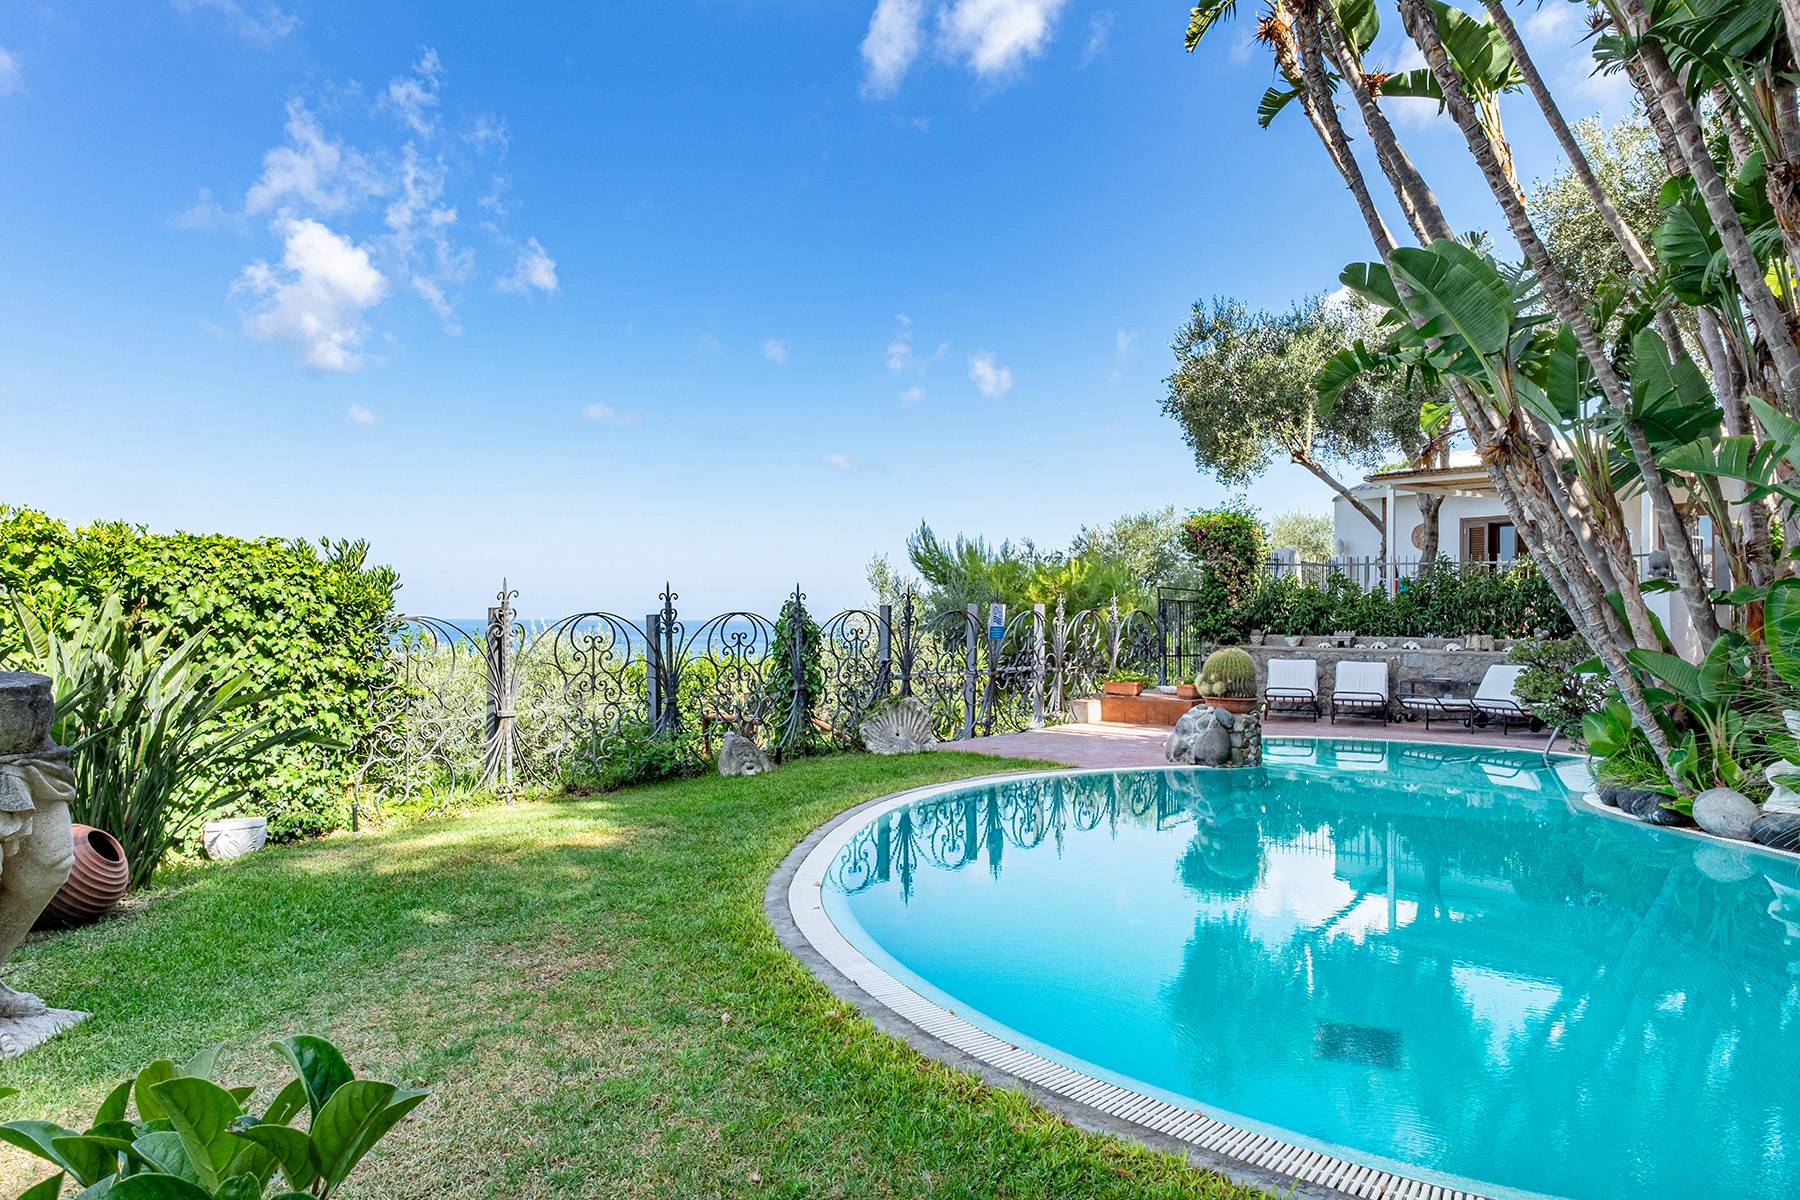 Villa in Vendita a Ischia: 5 locali, 750 mq - Foto 1